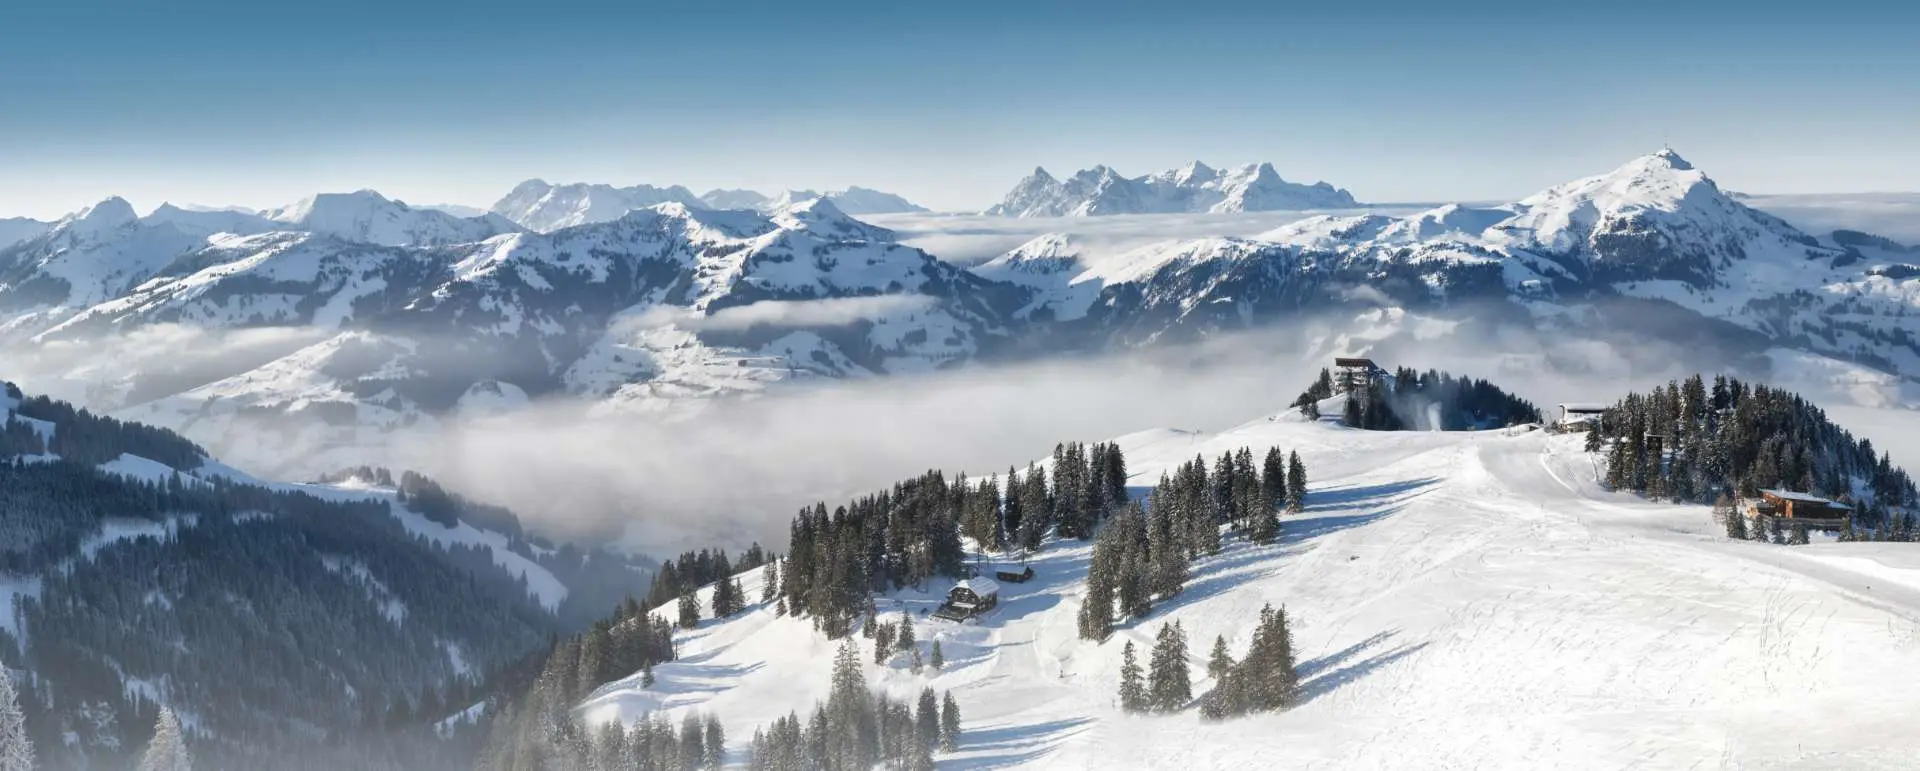 Kitzbühel Alps - the destination for sports teams